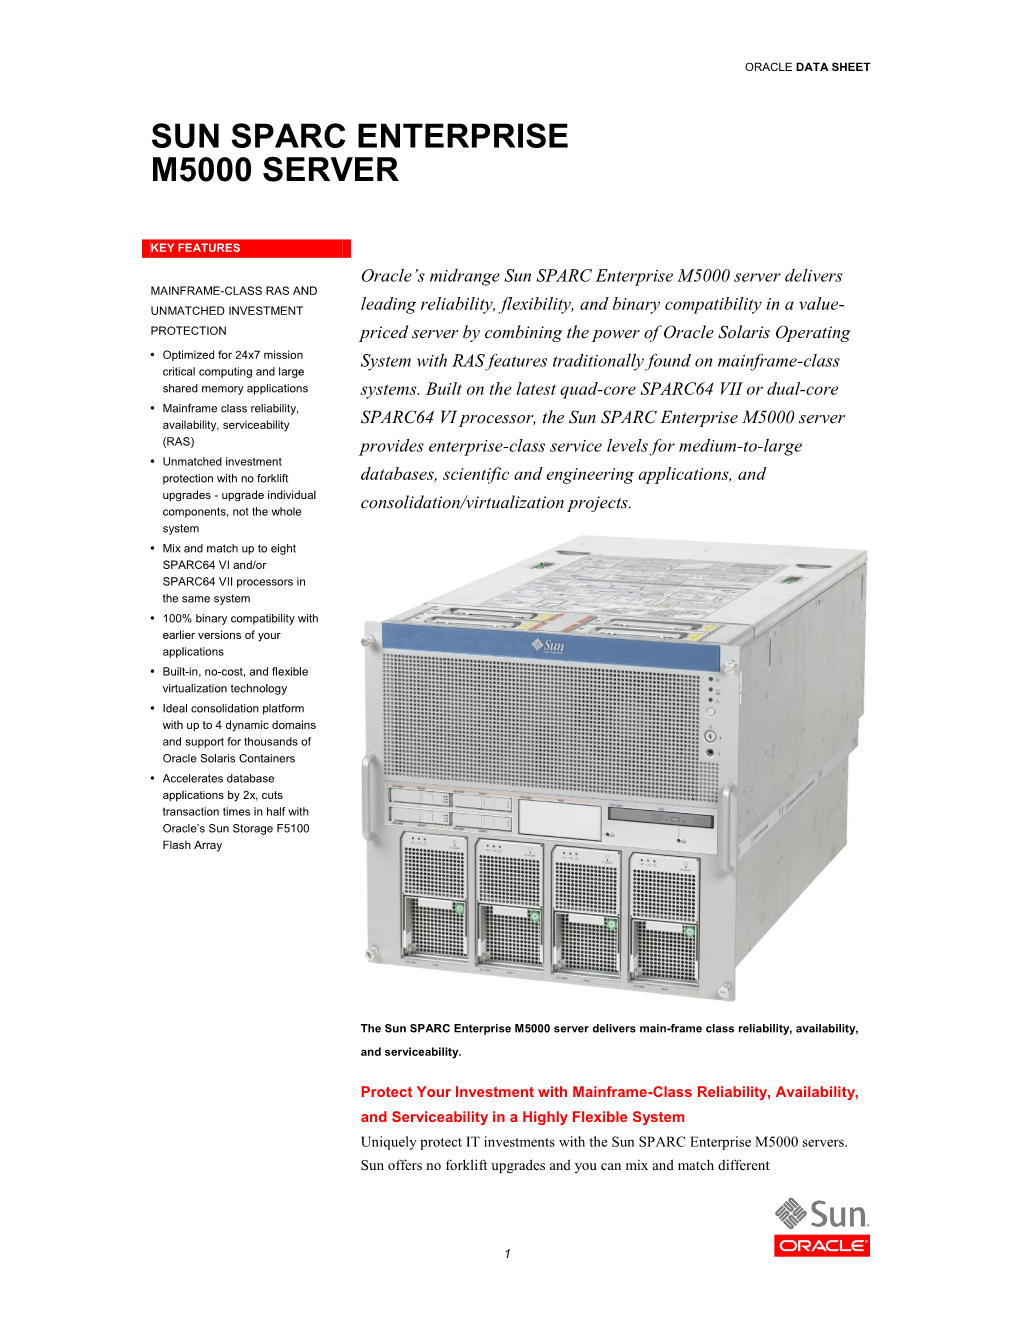 Sun SPARC Enterprise M5000 Server Data Sheet